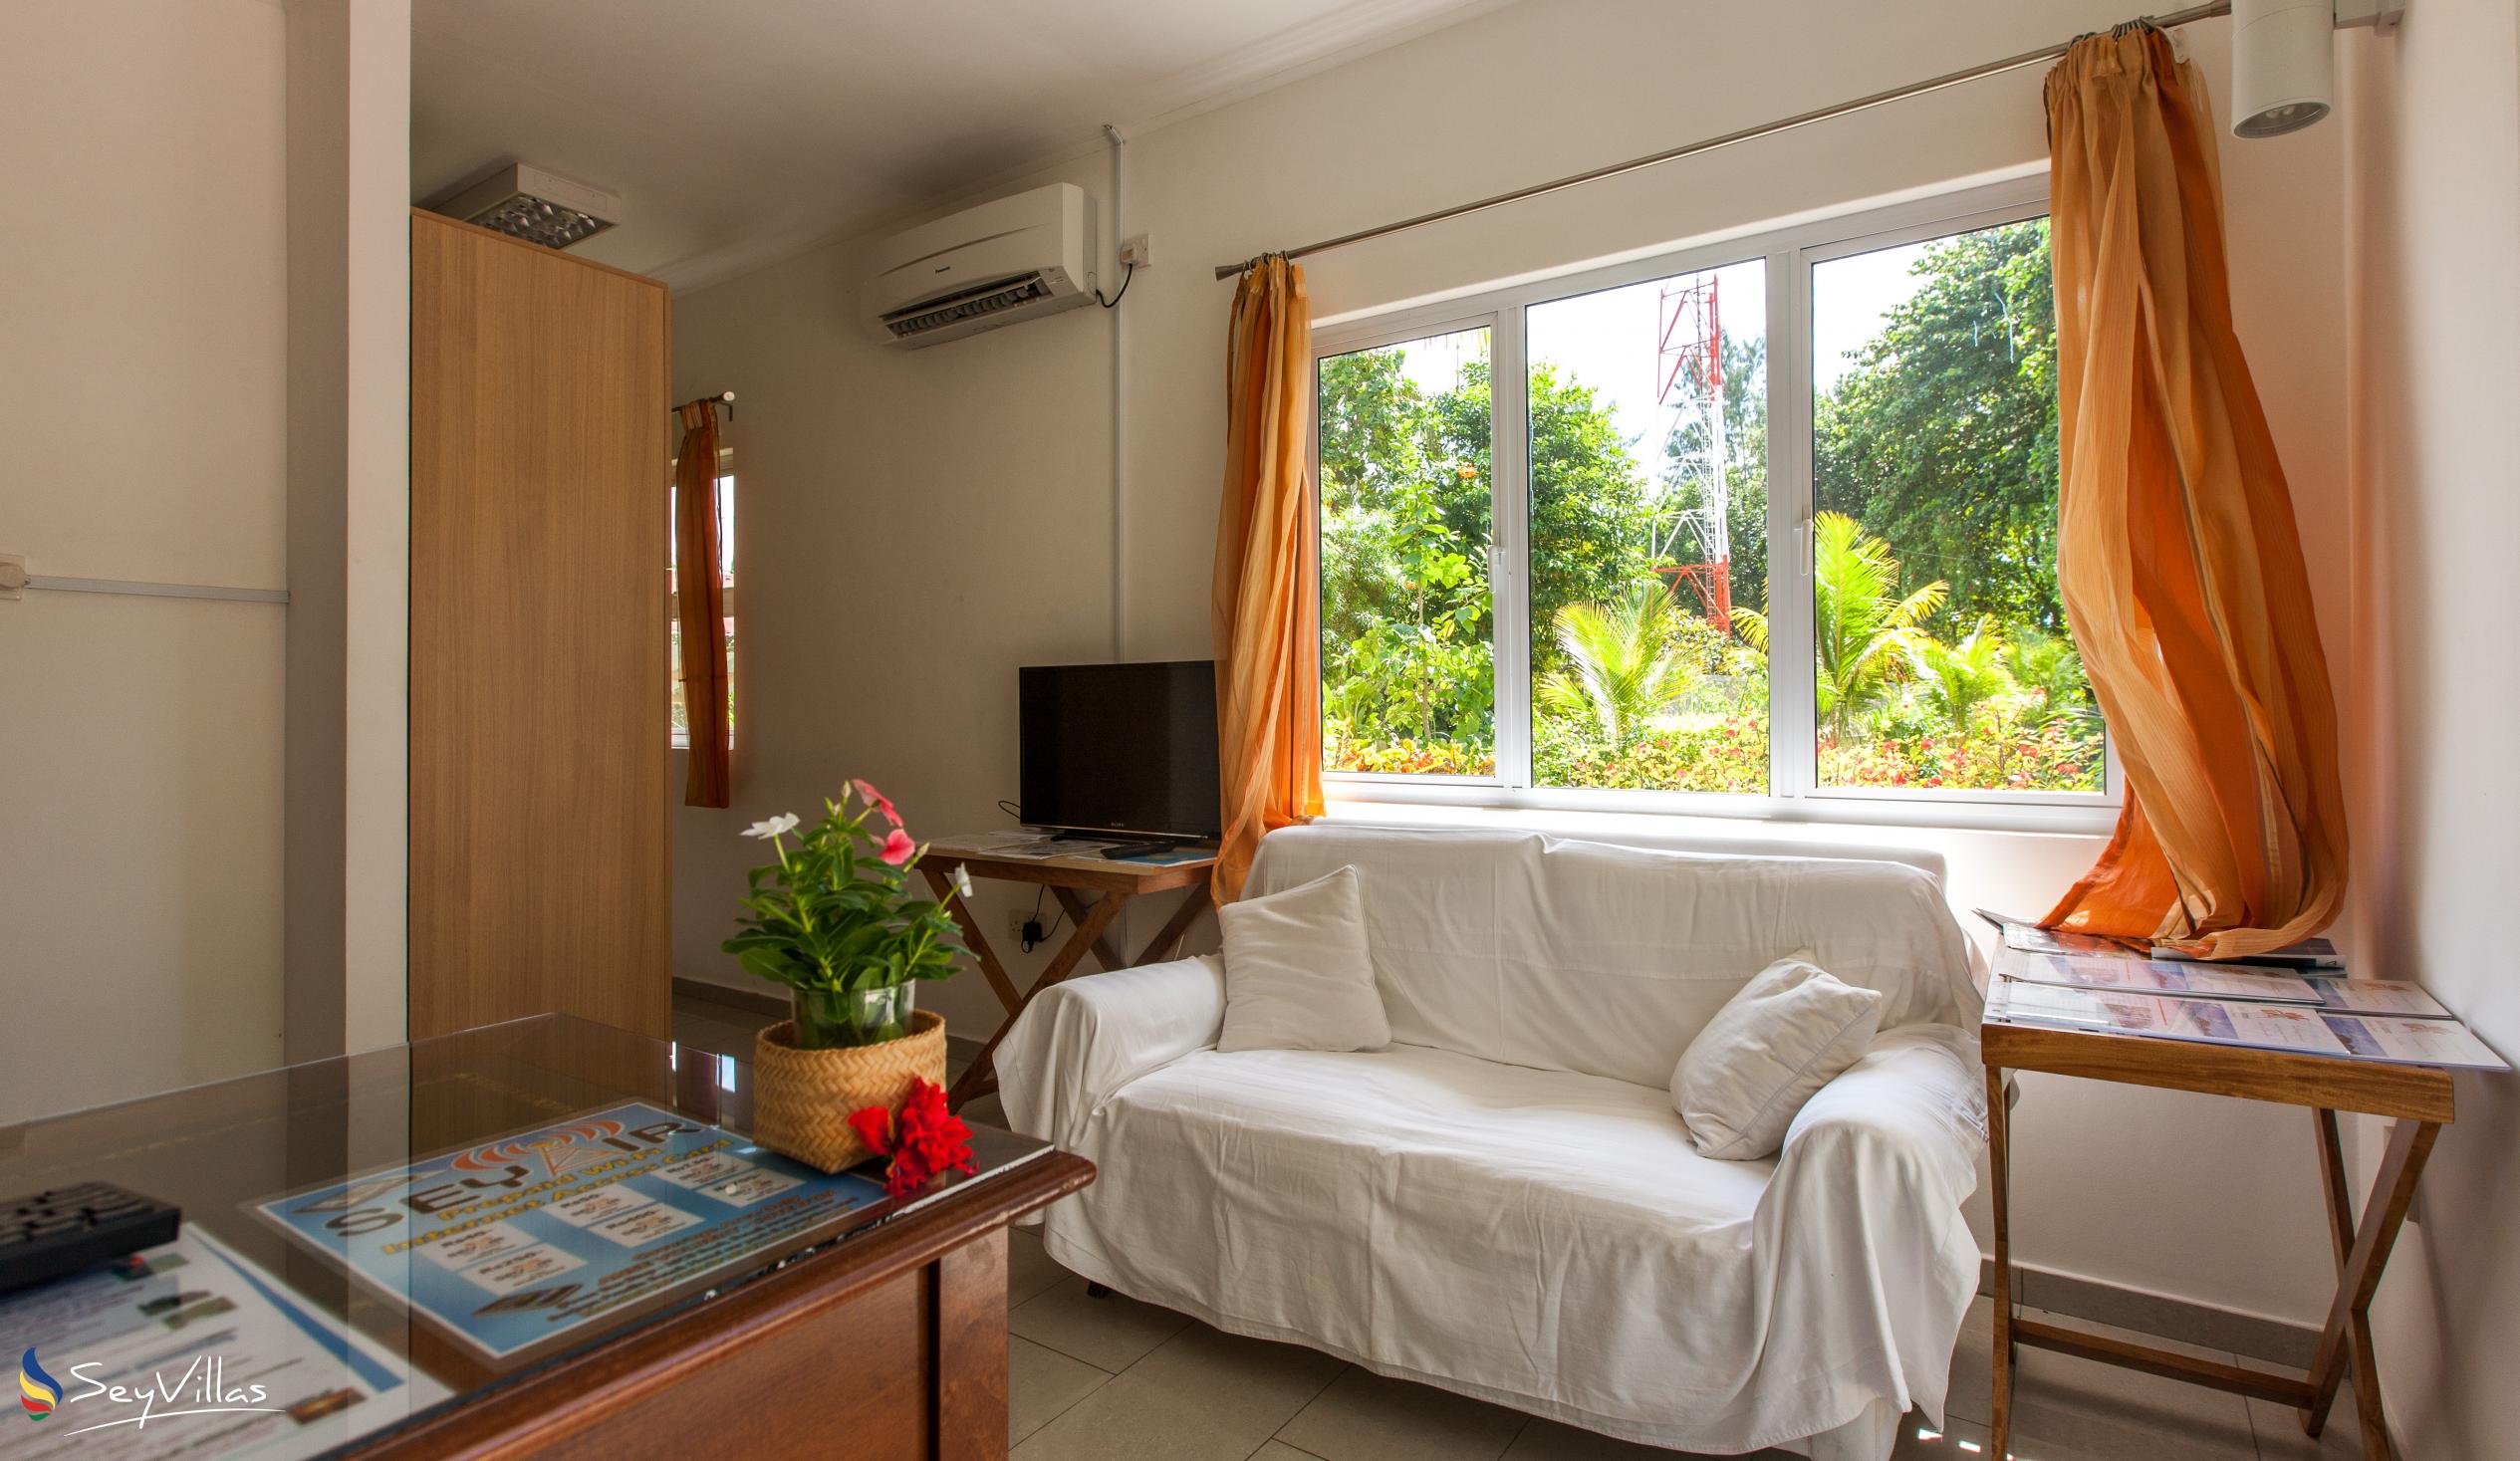 Photo 8: Cote d'Or Apartments - Indoor area - Praslin (Seychelles)